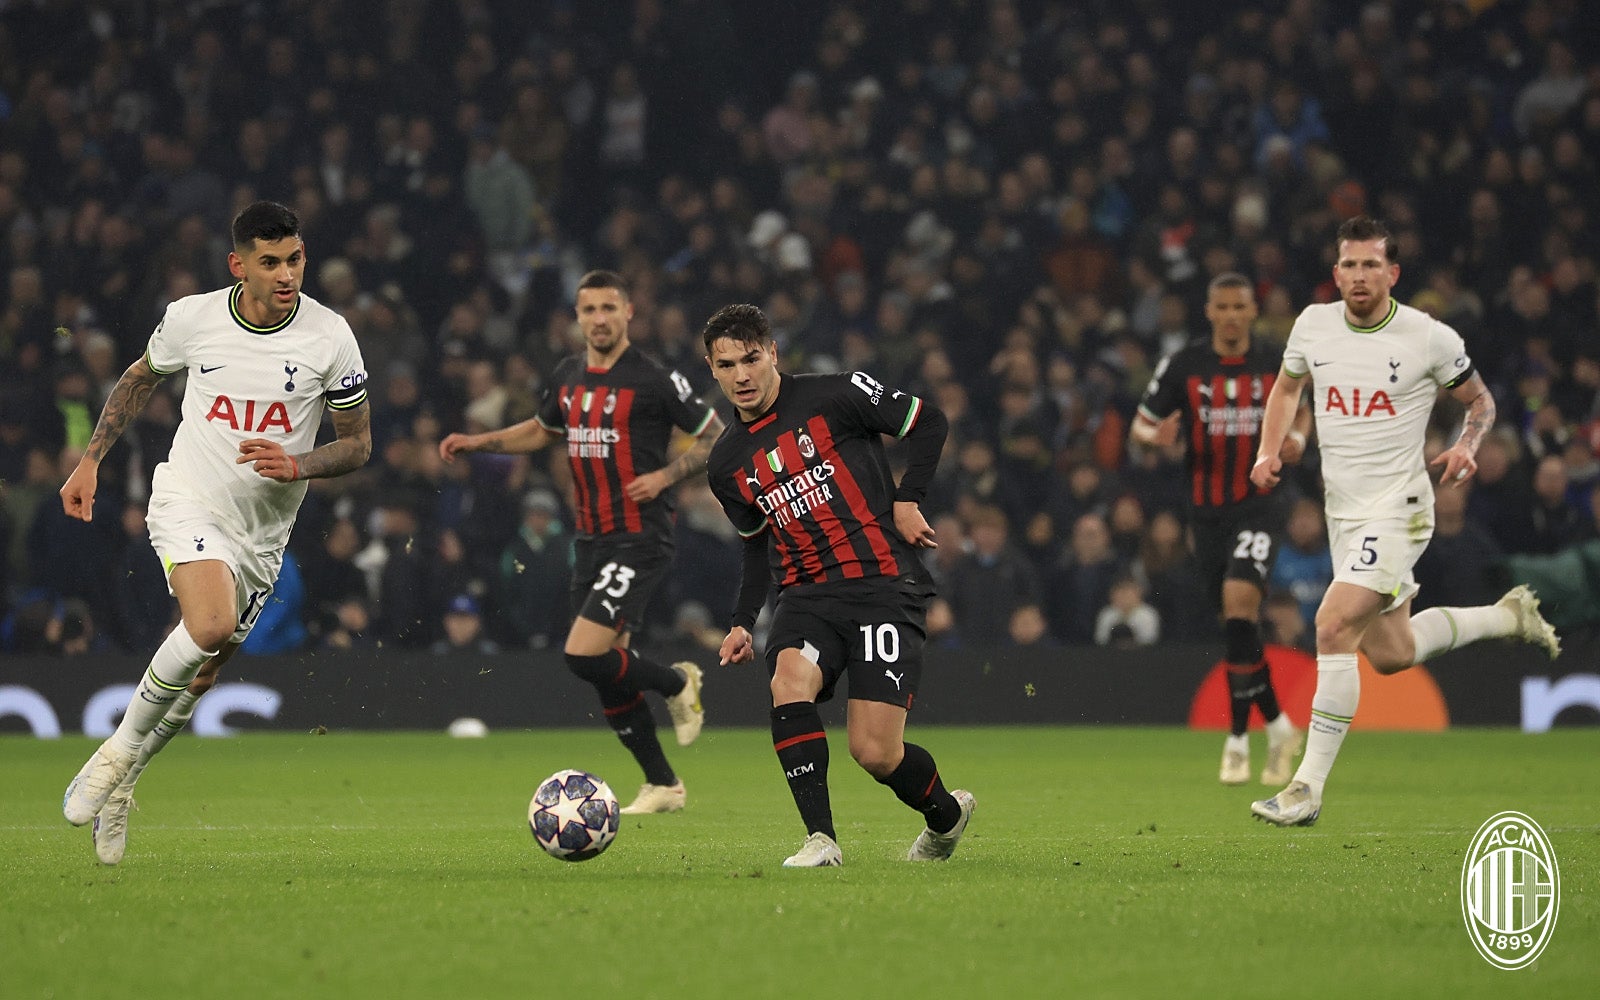 Tottenham 0-0 AC Milan, UEFA Champions League 2022/2023: the match